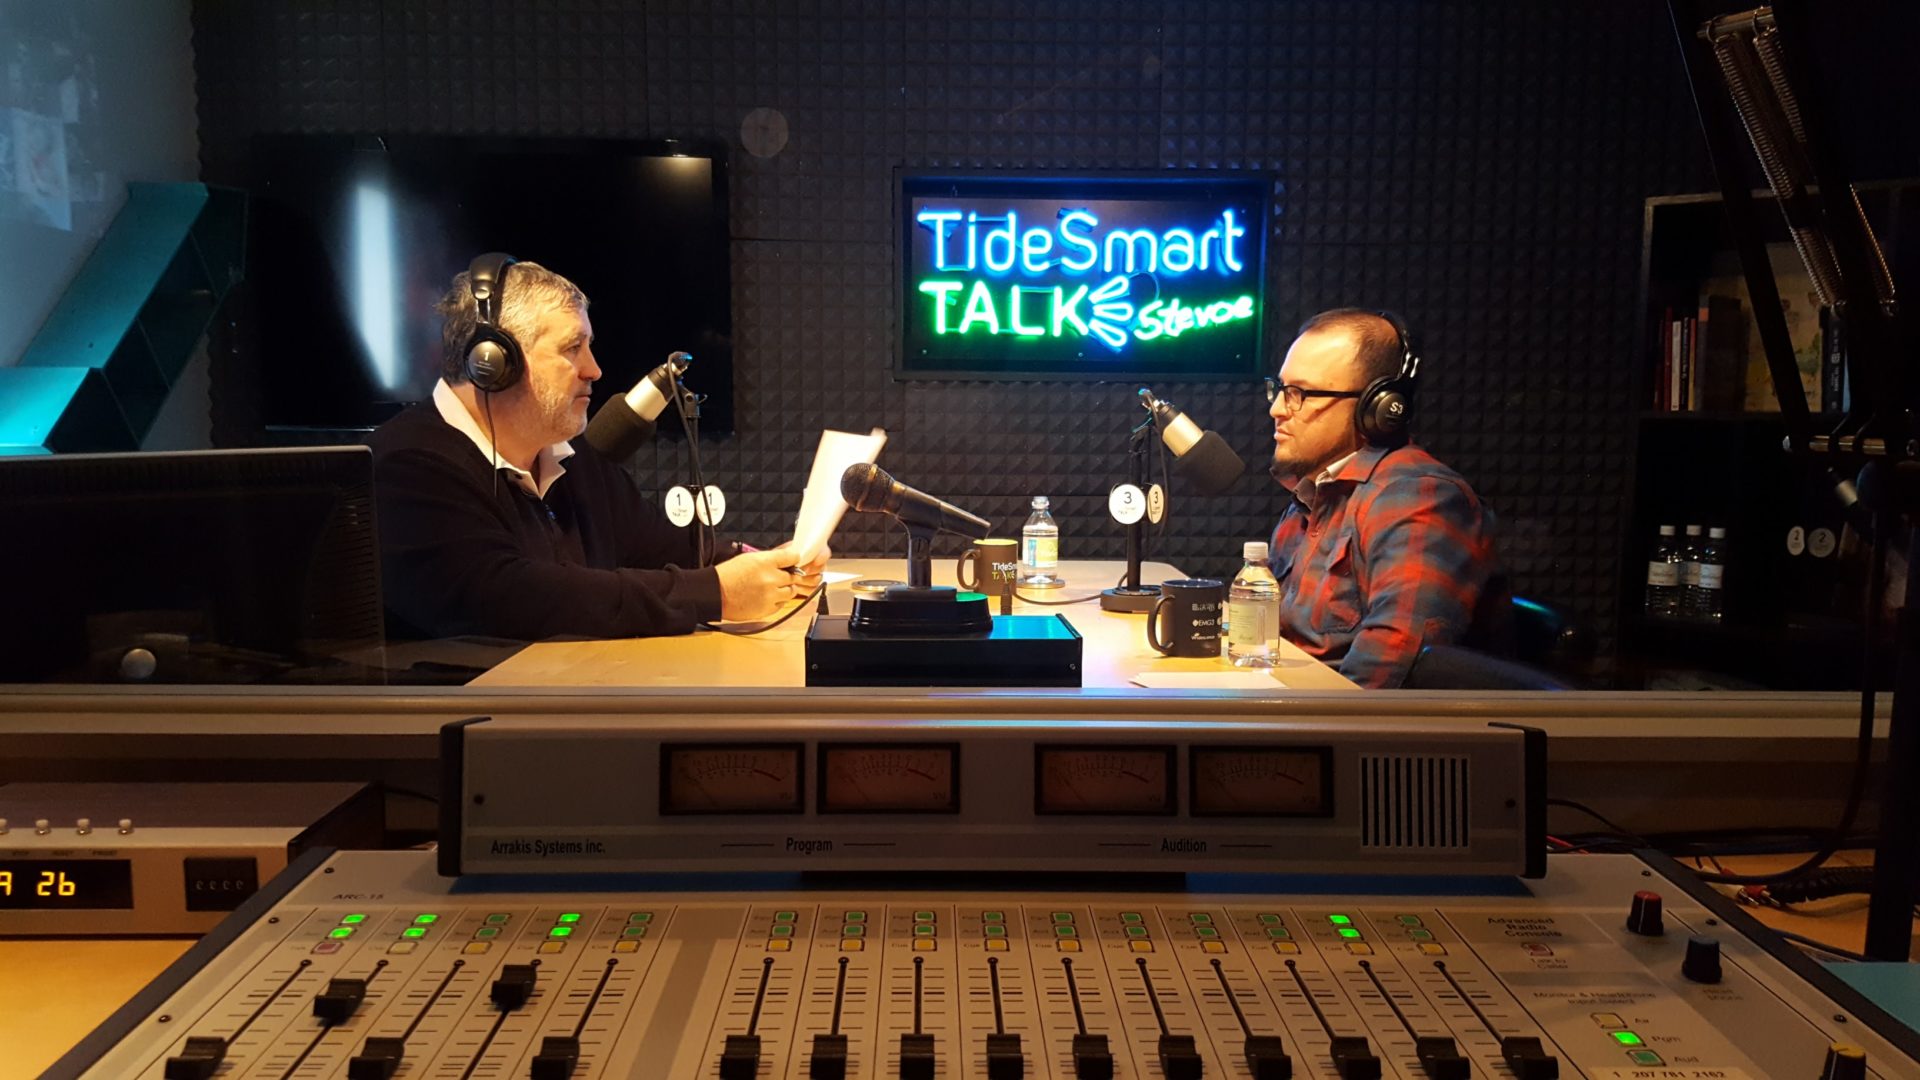 Host of TideSmart Talk with Stevoe, Steve Woods, welcomed Producer of TEDxDirigo, Adam Burk (at right).